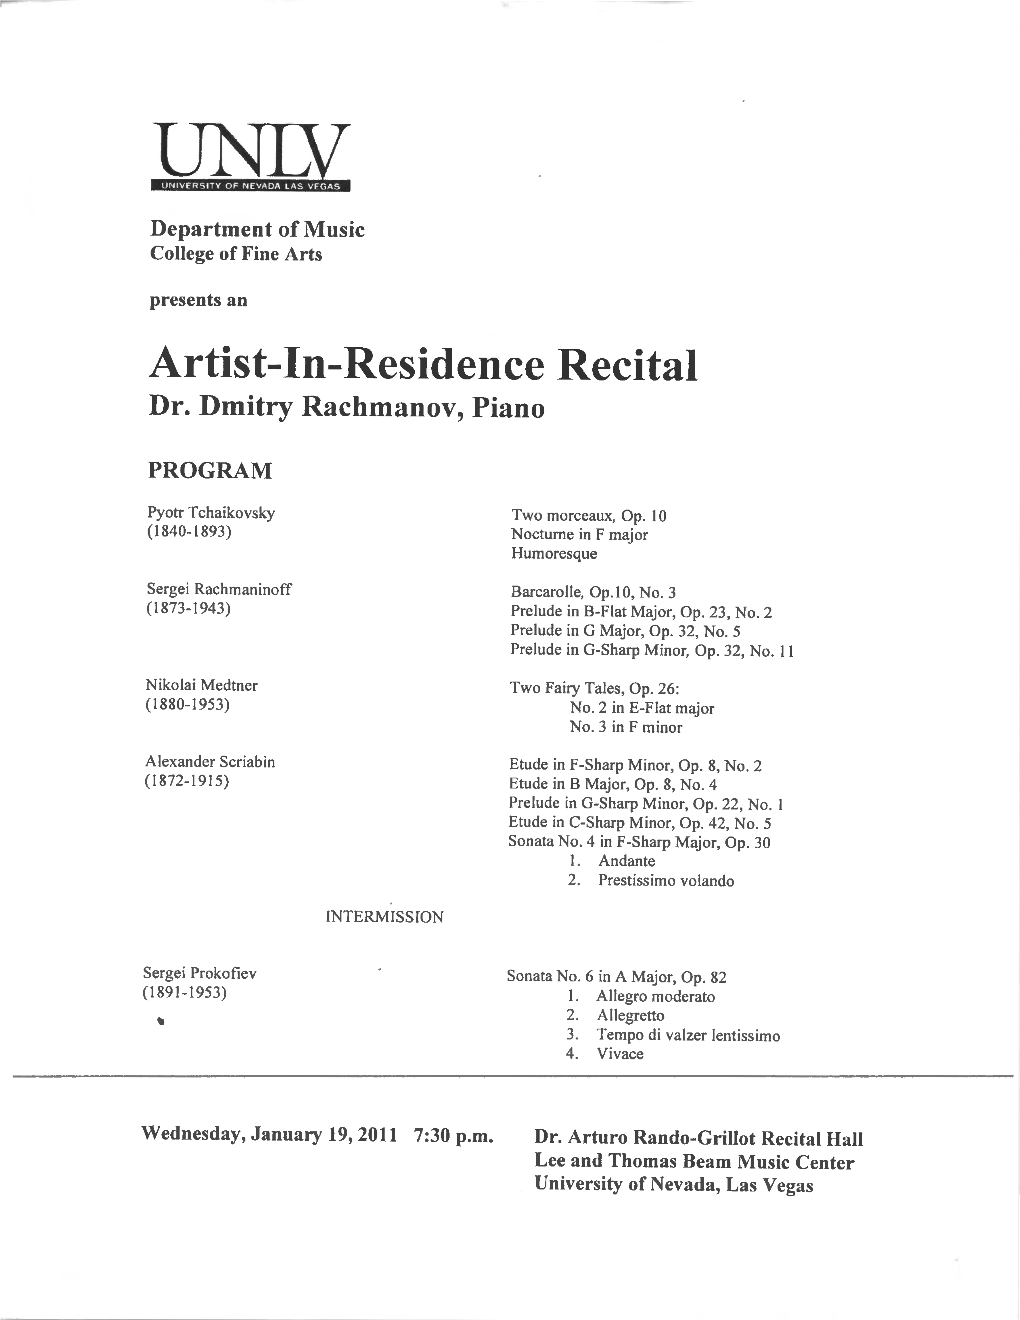 Artist-In-Residence Recital Dr. Dmitry Rachmanov, Piano